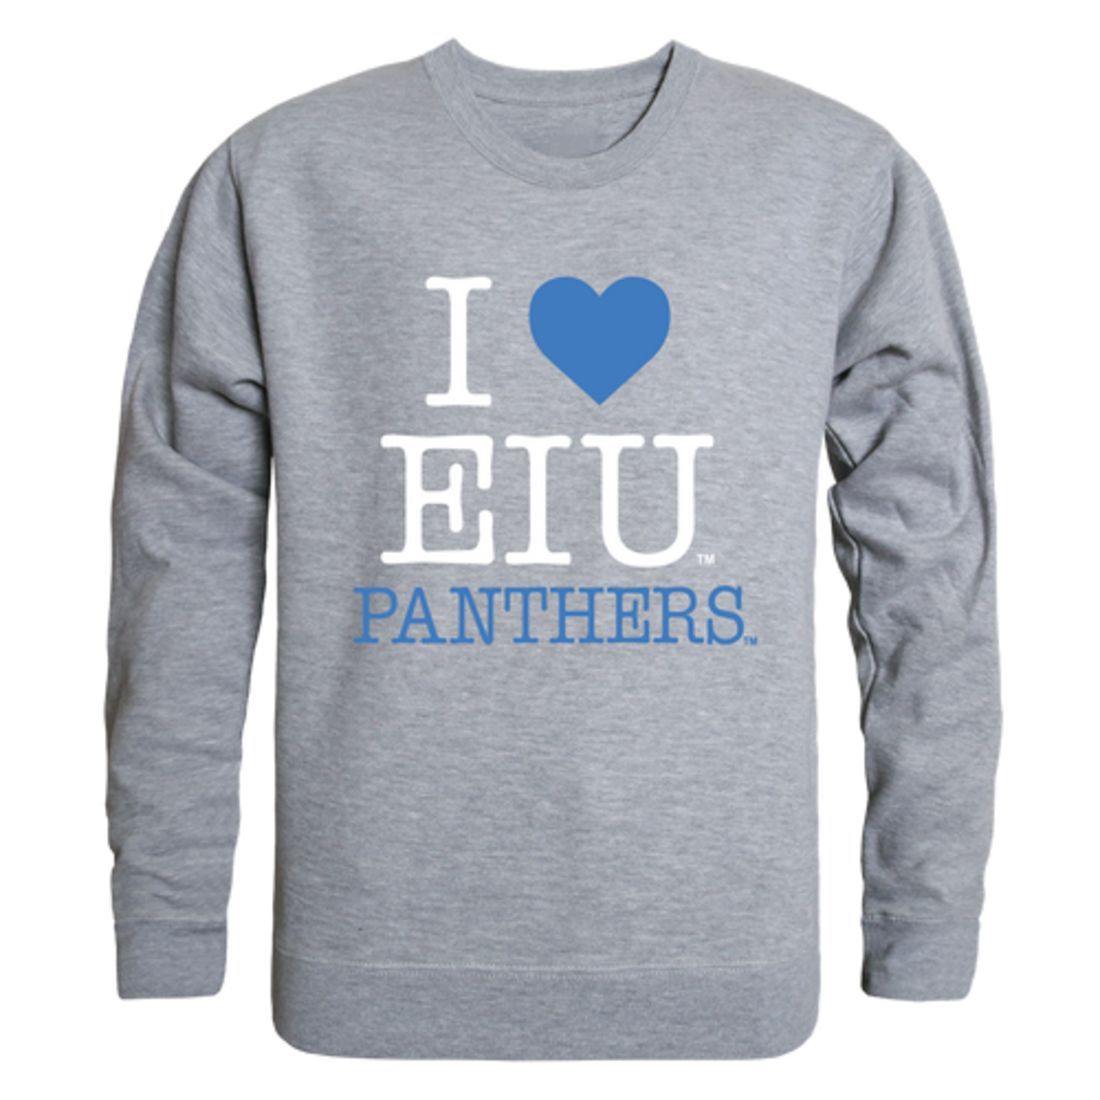 I Love EIU Eastern Illinois University Panthers Crewneck Pullover Sweatshirt Sweater-Campus-Wardrobe